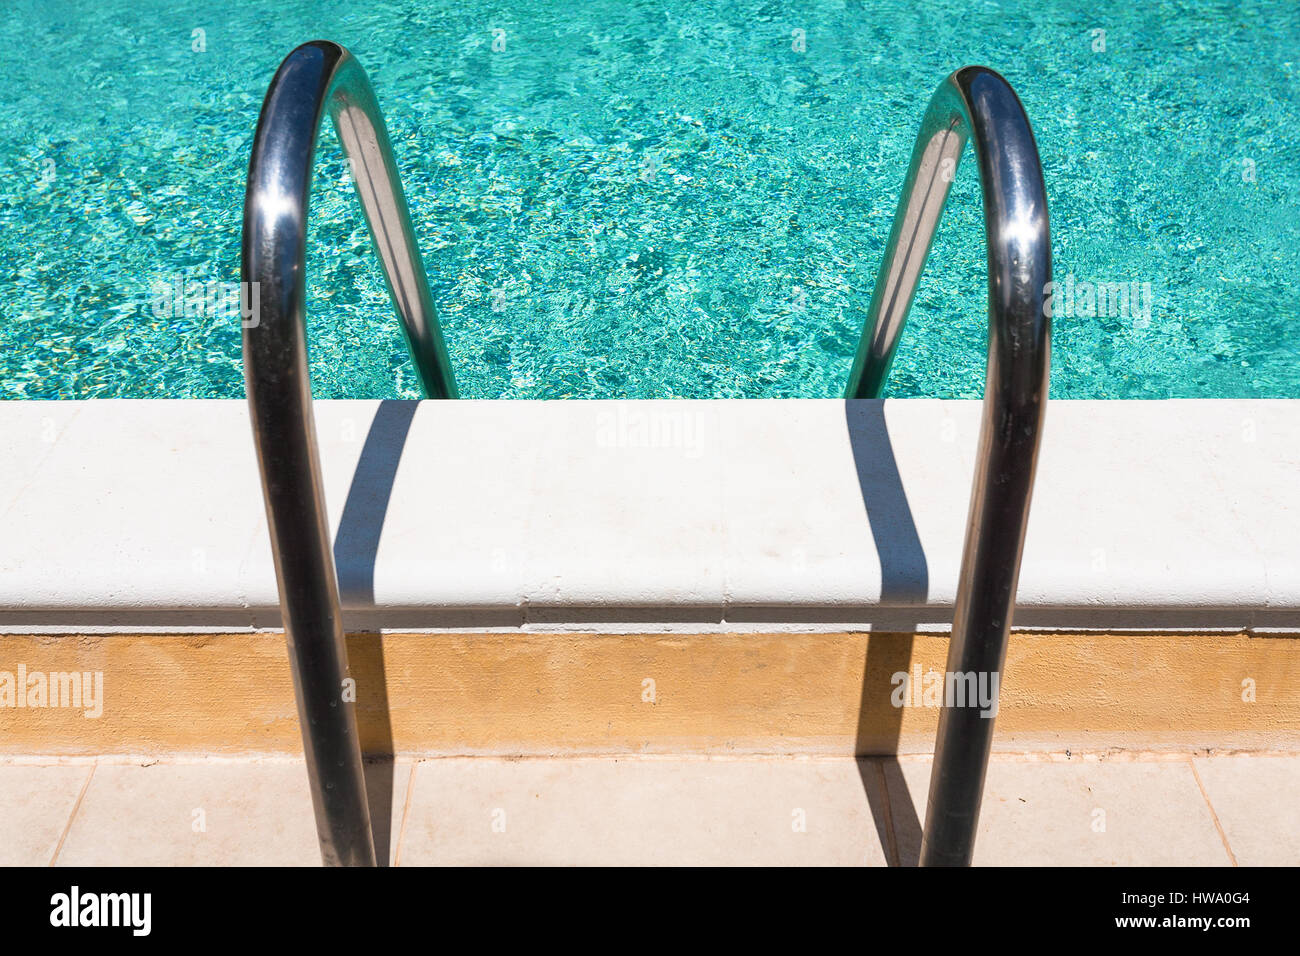 metal handles of outdoor swimming pool Stock Photo